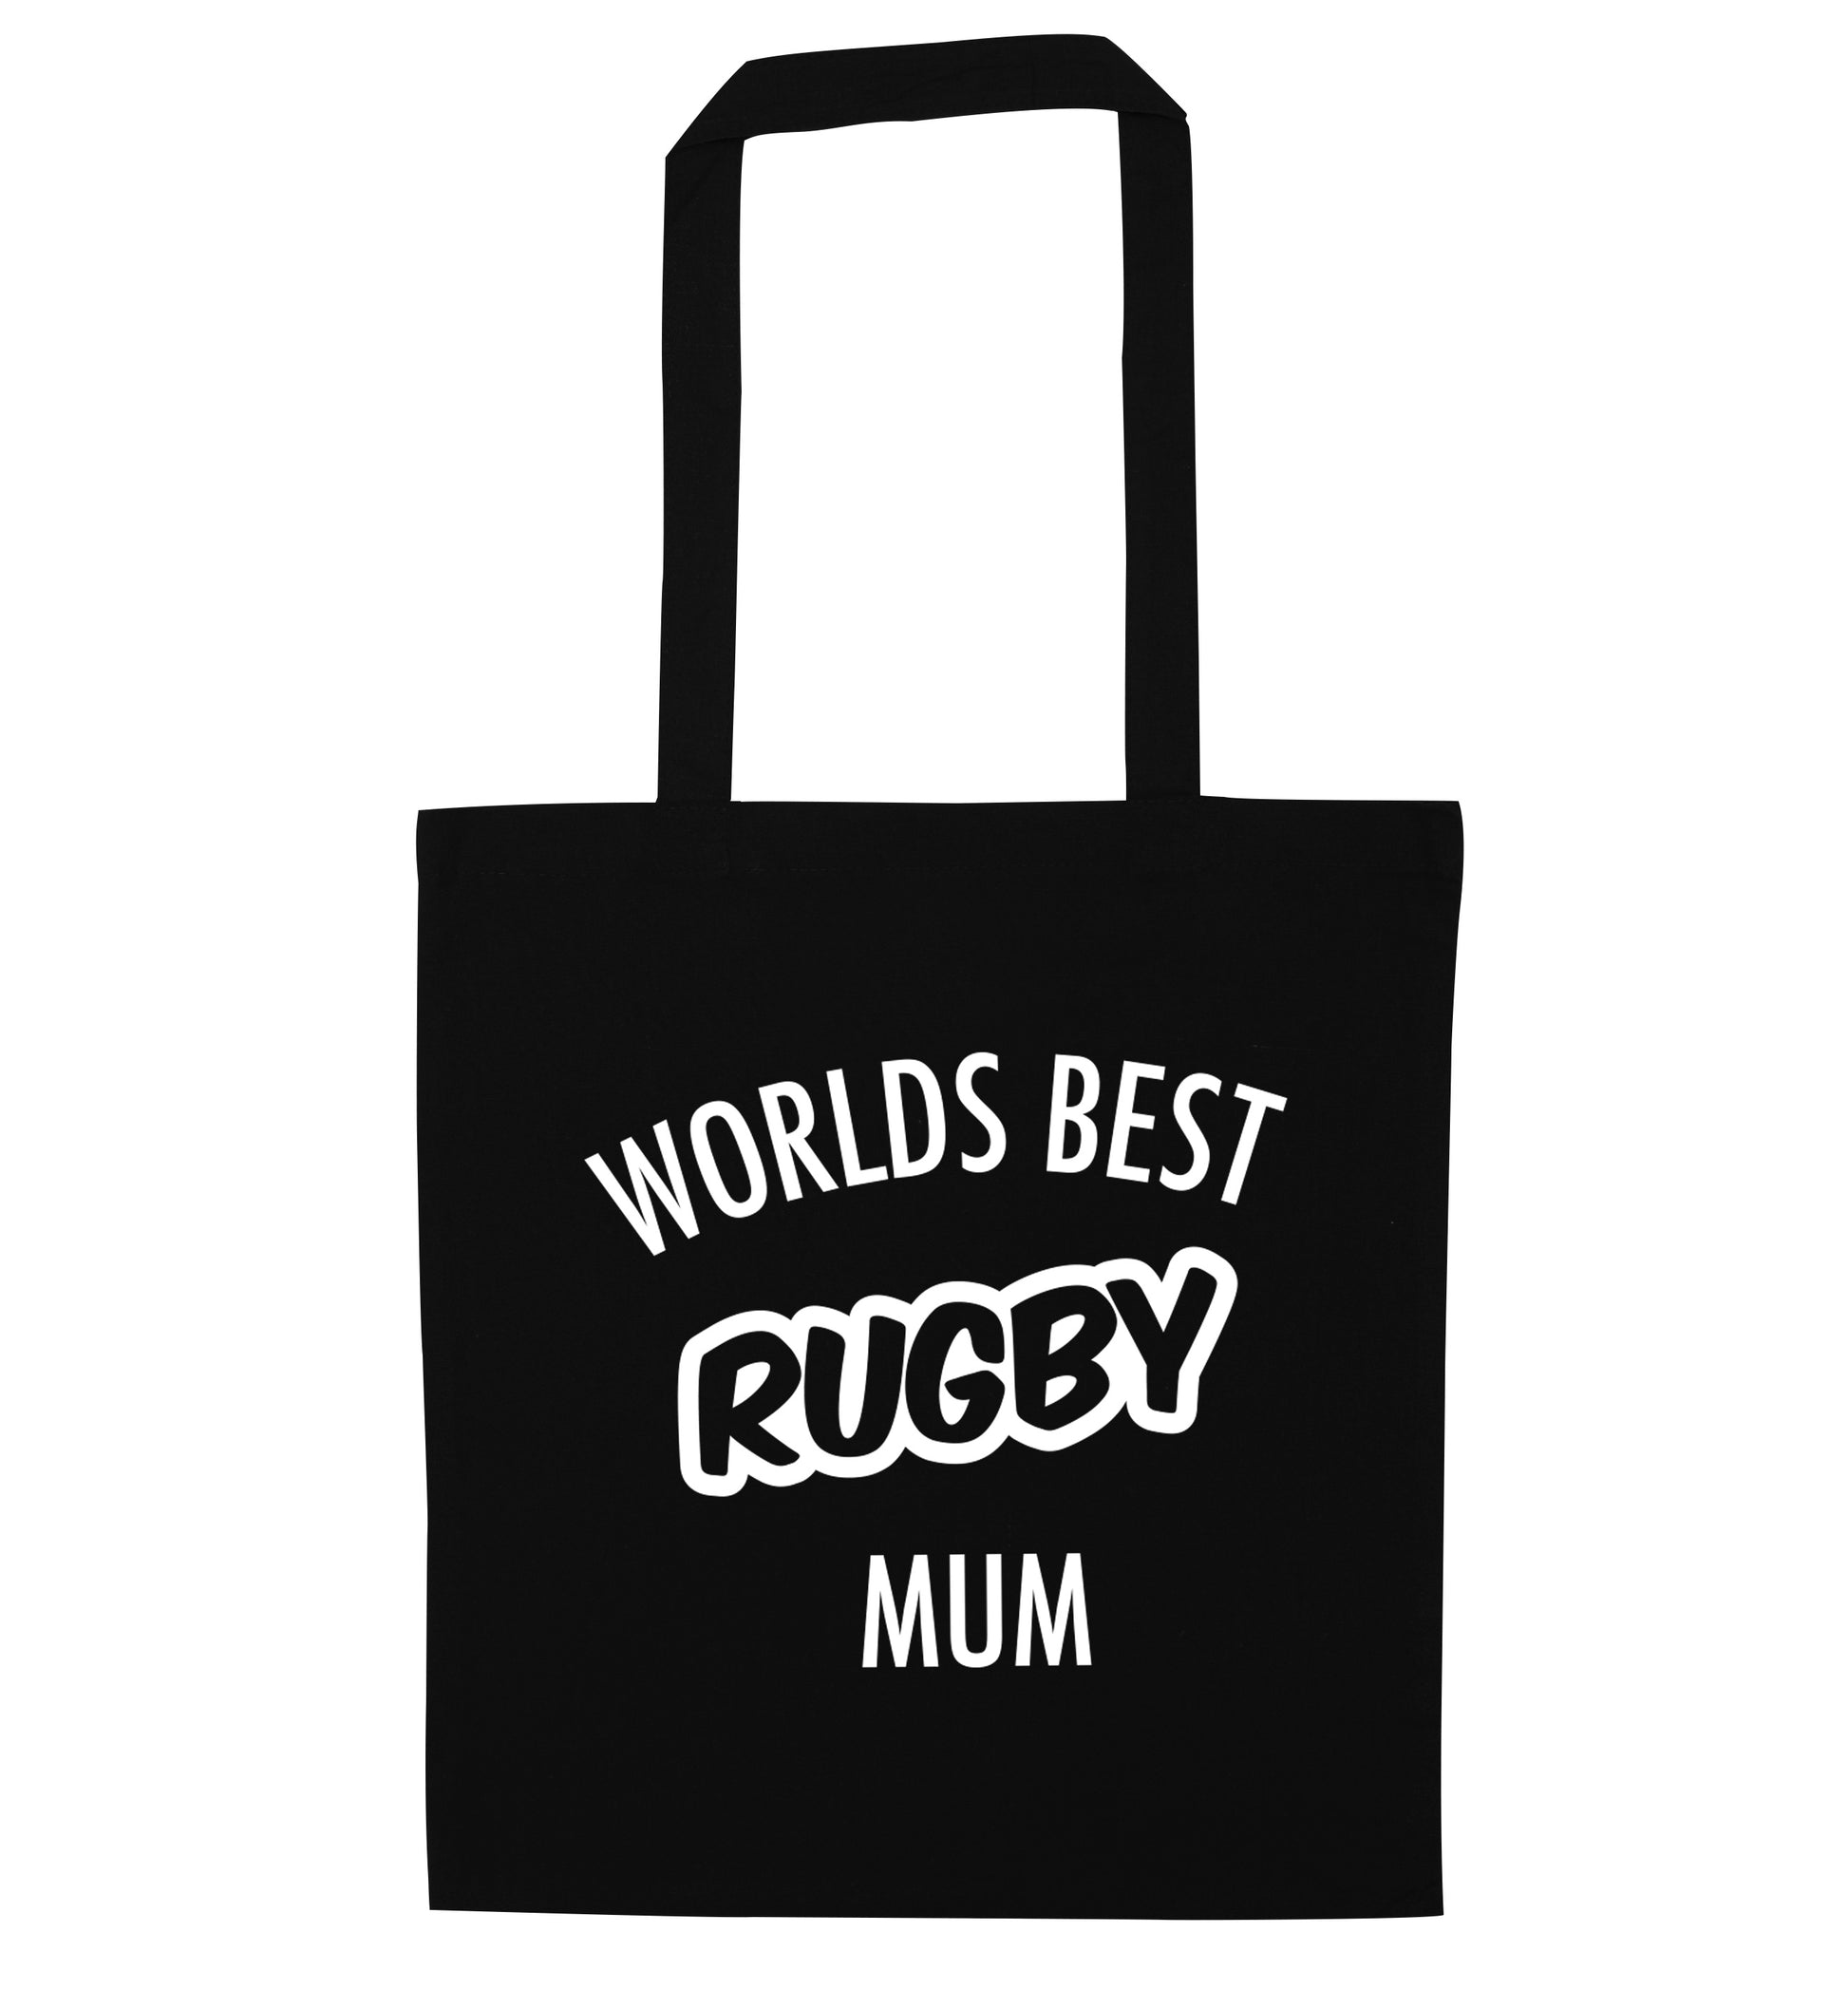 Worlds best rugby mum black tote bag